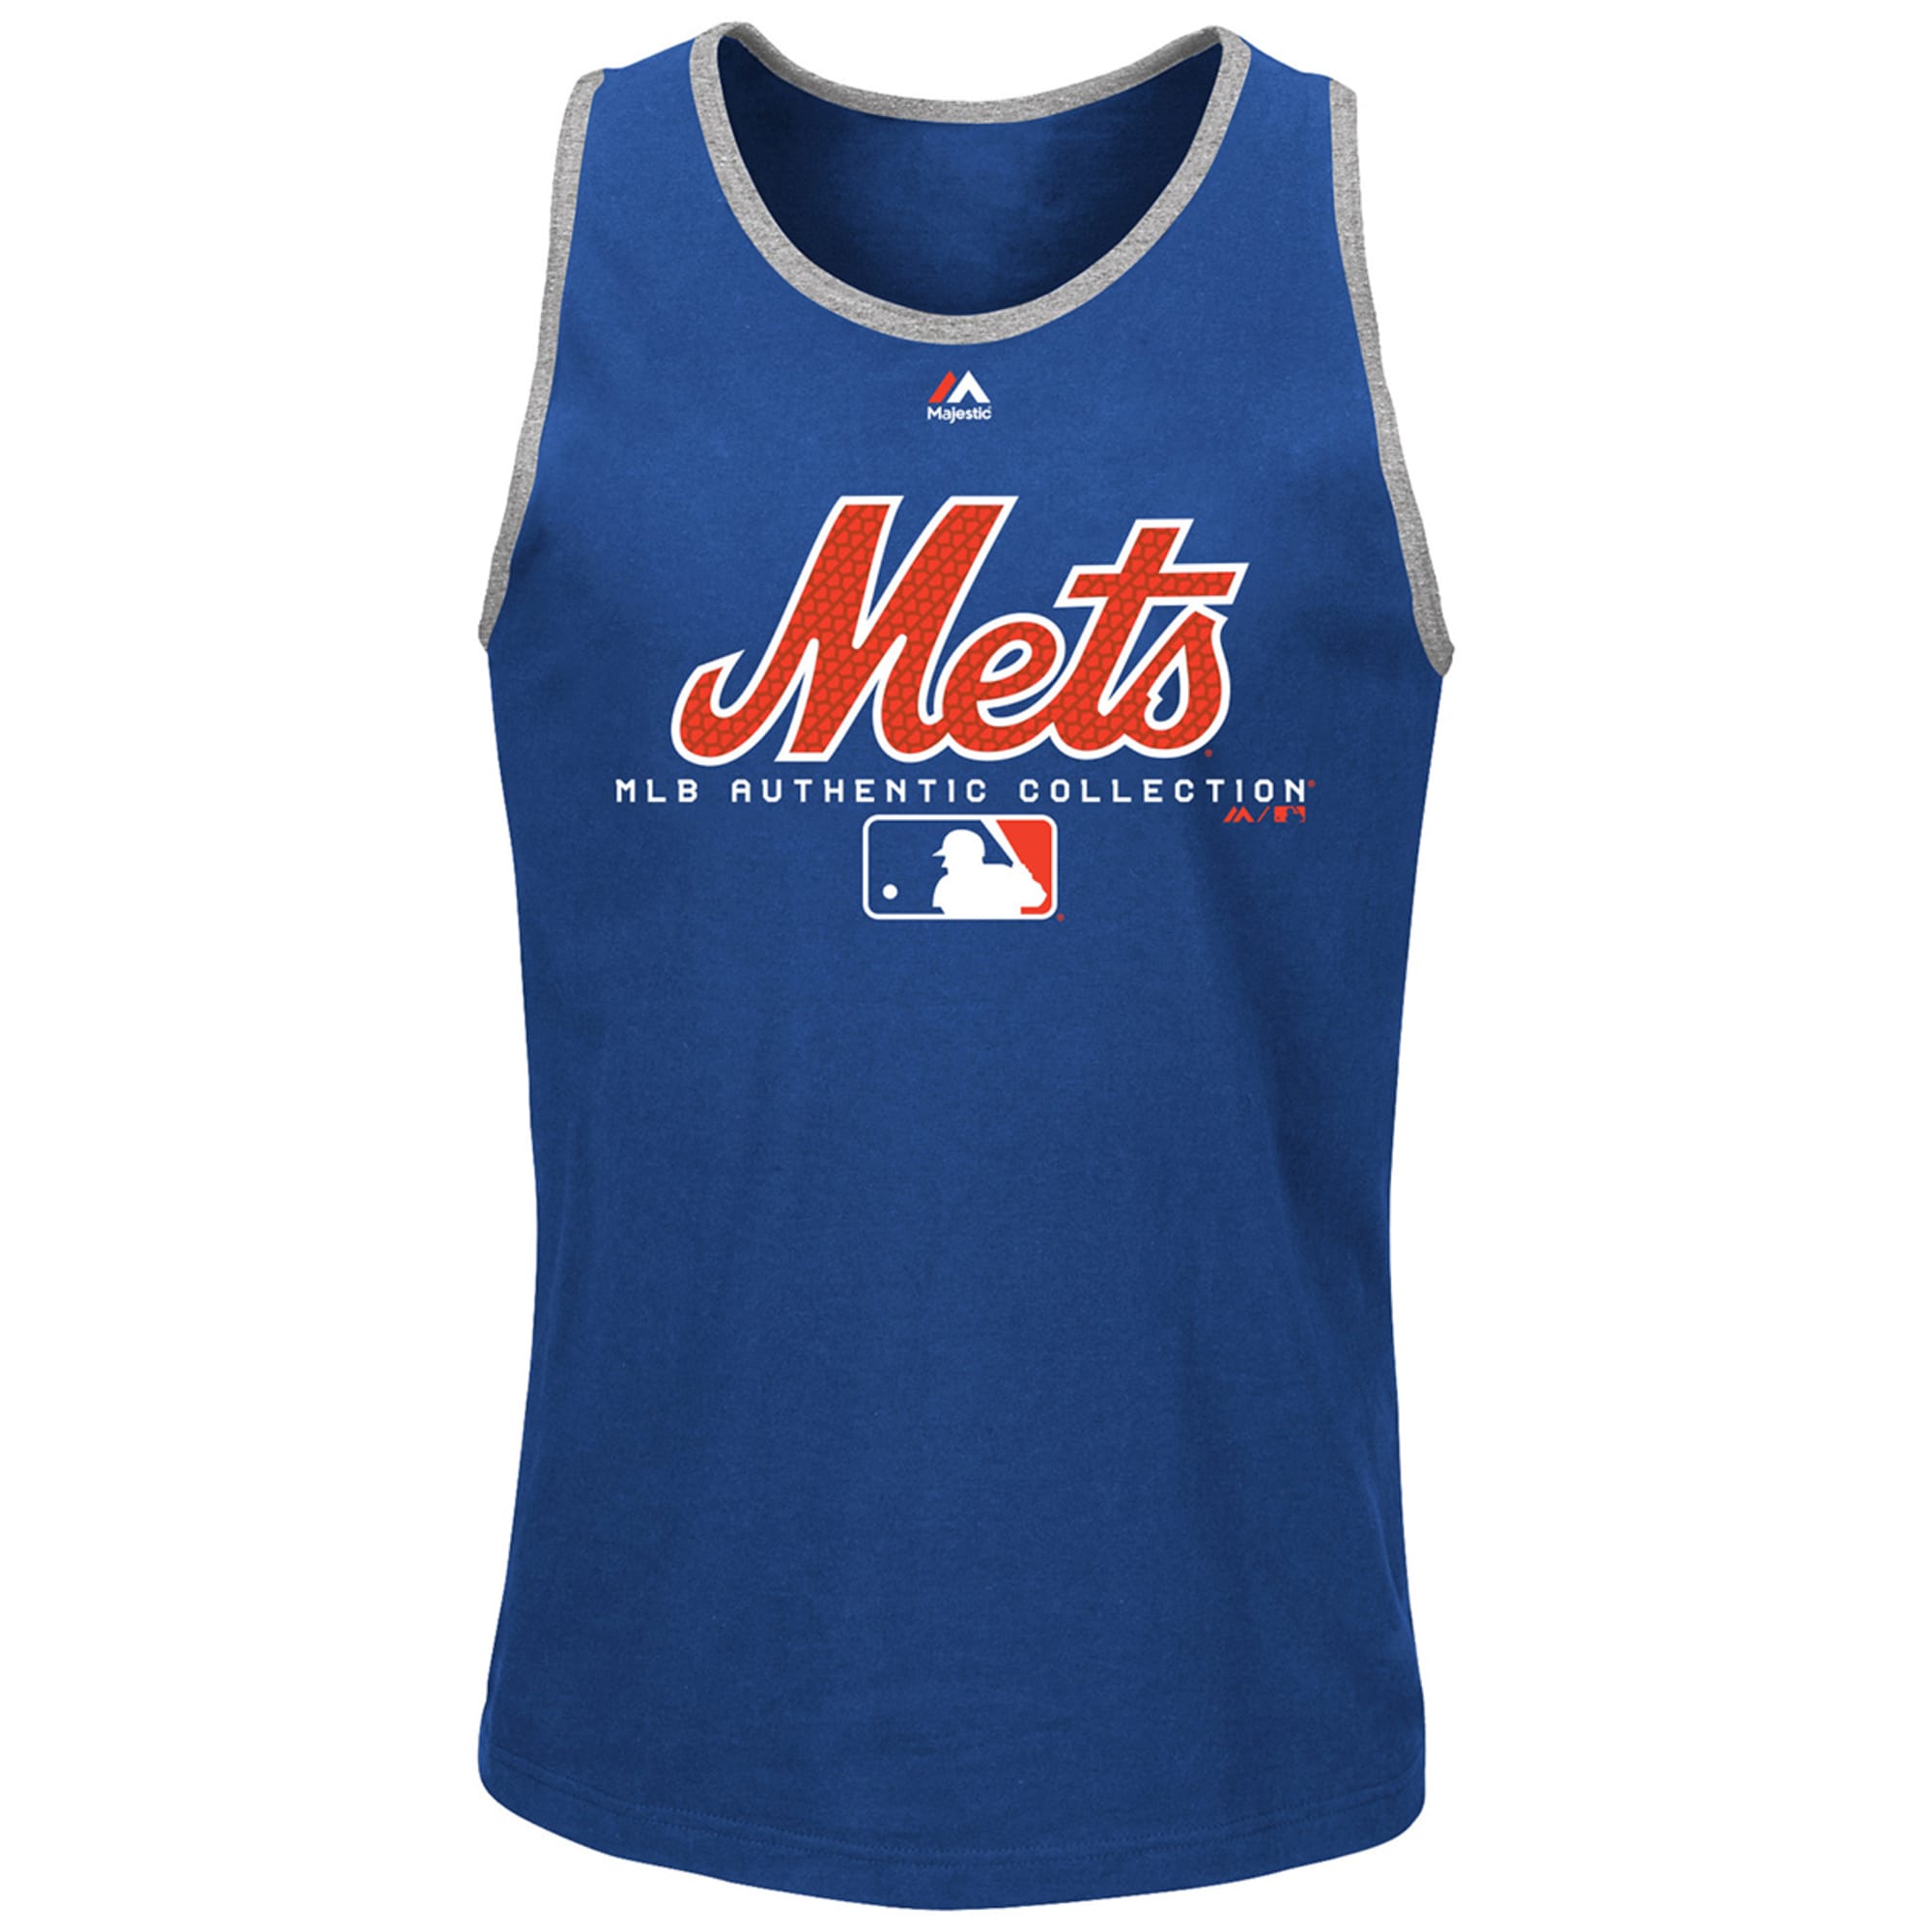 Cheap Hot Baseball Team Mets October Rise Shirt, New York Mets Shirt -  Wiseabe Apparels